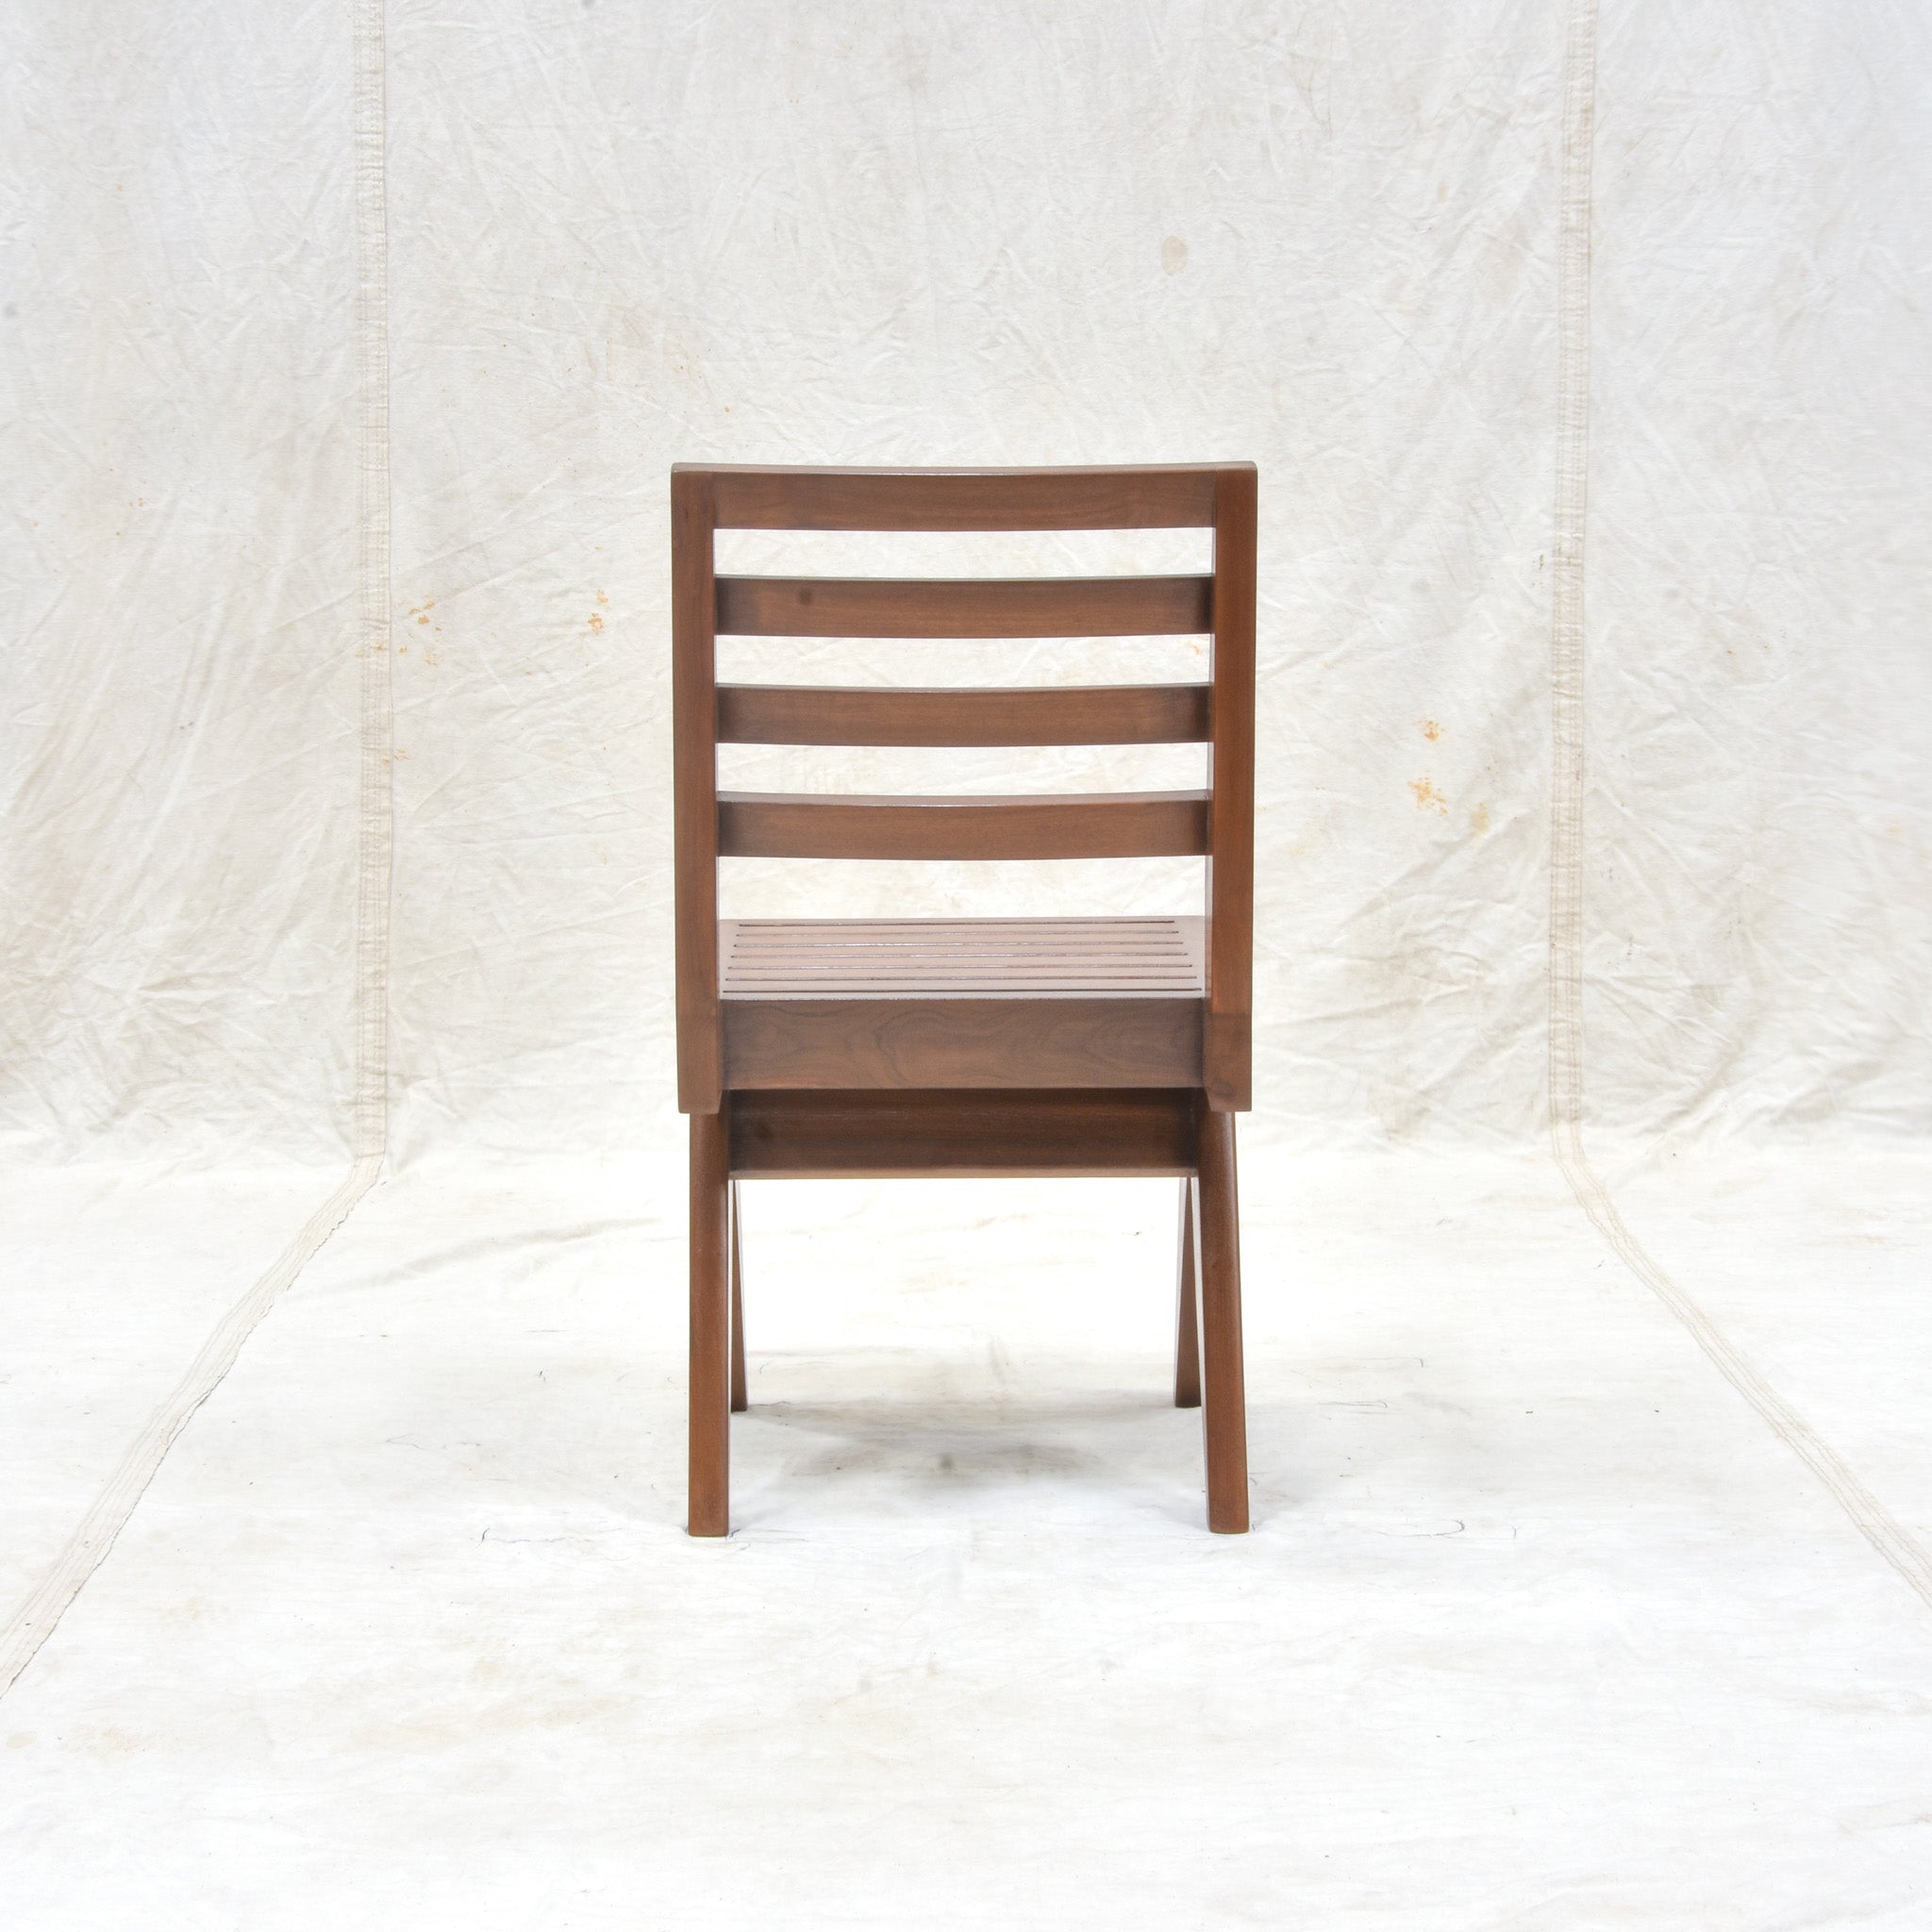 Pierre Jeanneret Slatted Student Chair-outdoor teak furniture-4